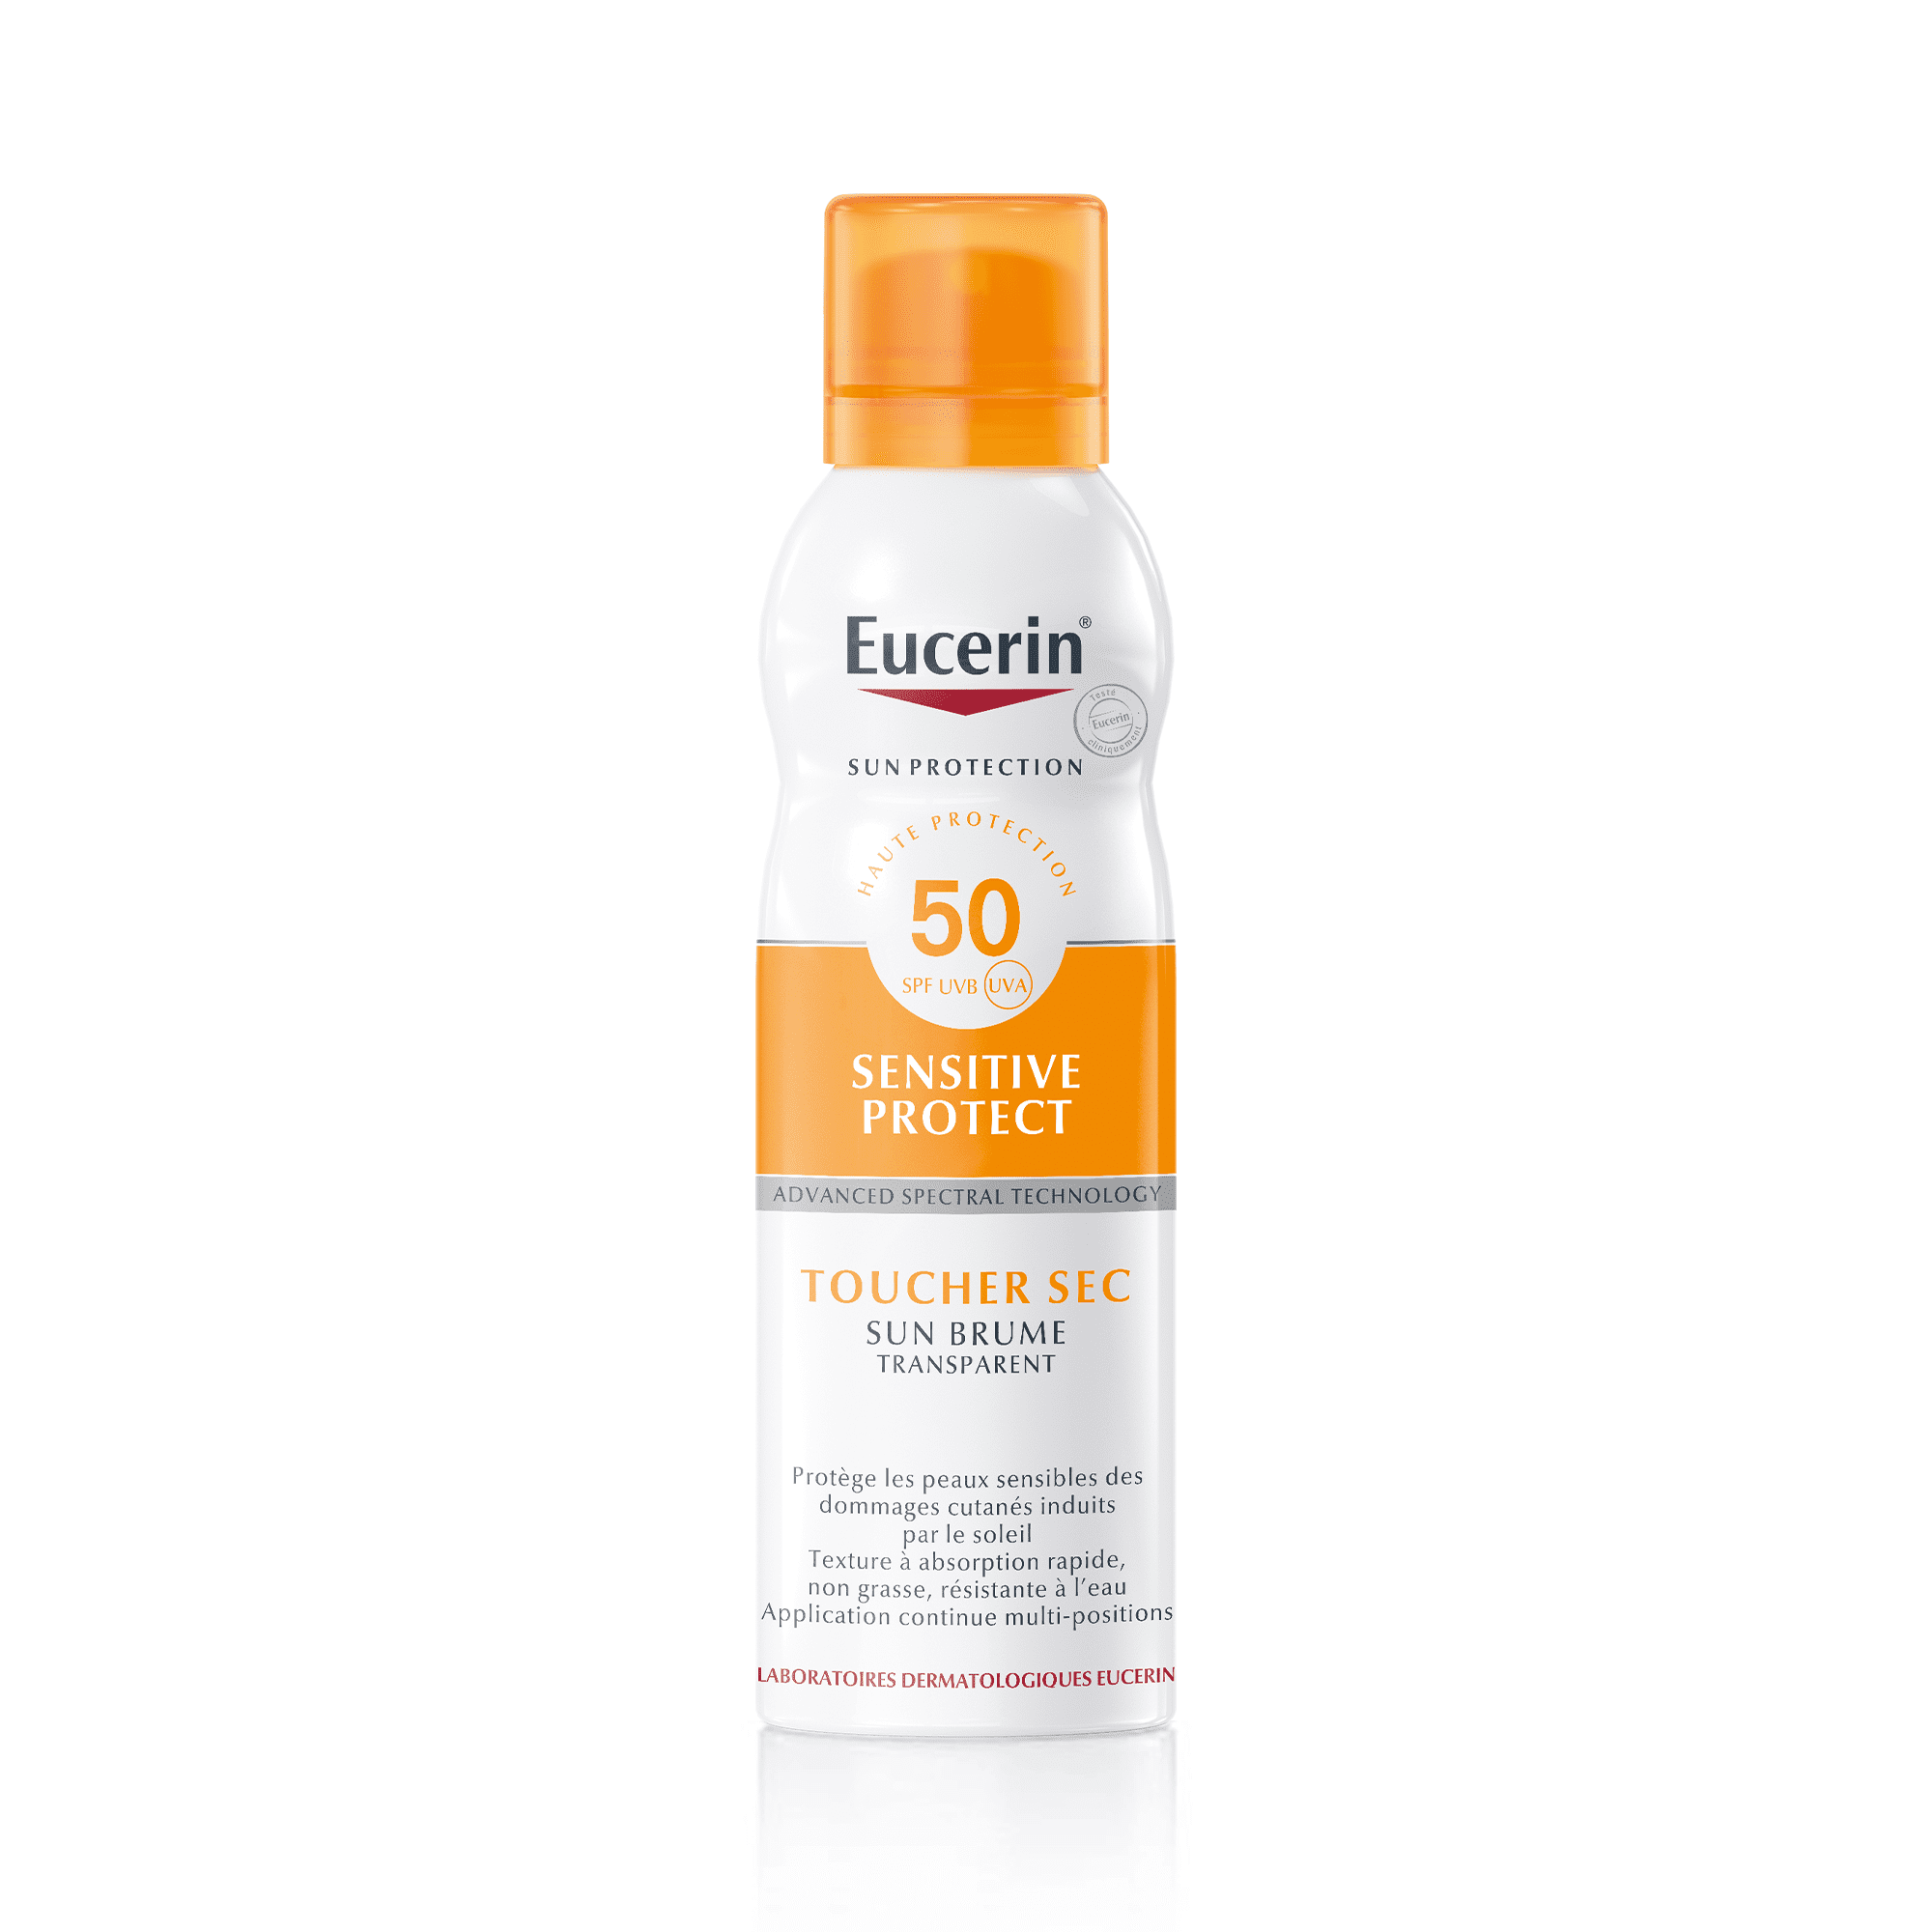 Eucerin Sun Brume Transparent Toucher Sec Sensitive Protect SPF 50